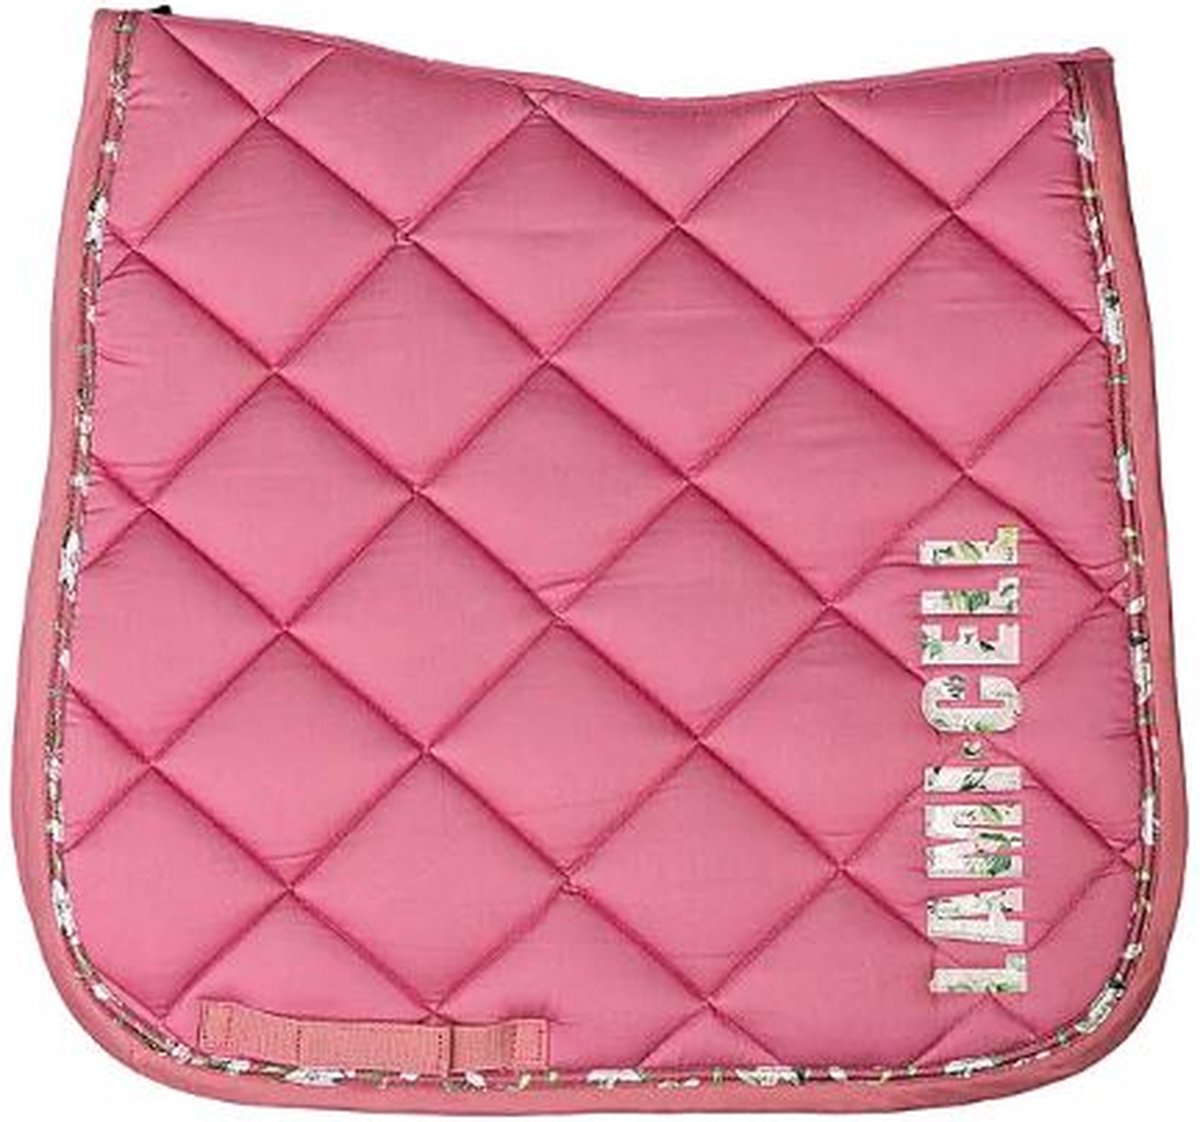 Lami-cell - saddle pad - zadeldek - Florence - Old Pink - dressuur - full